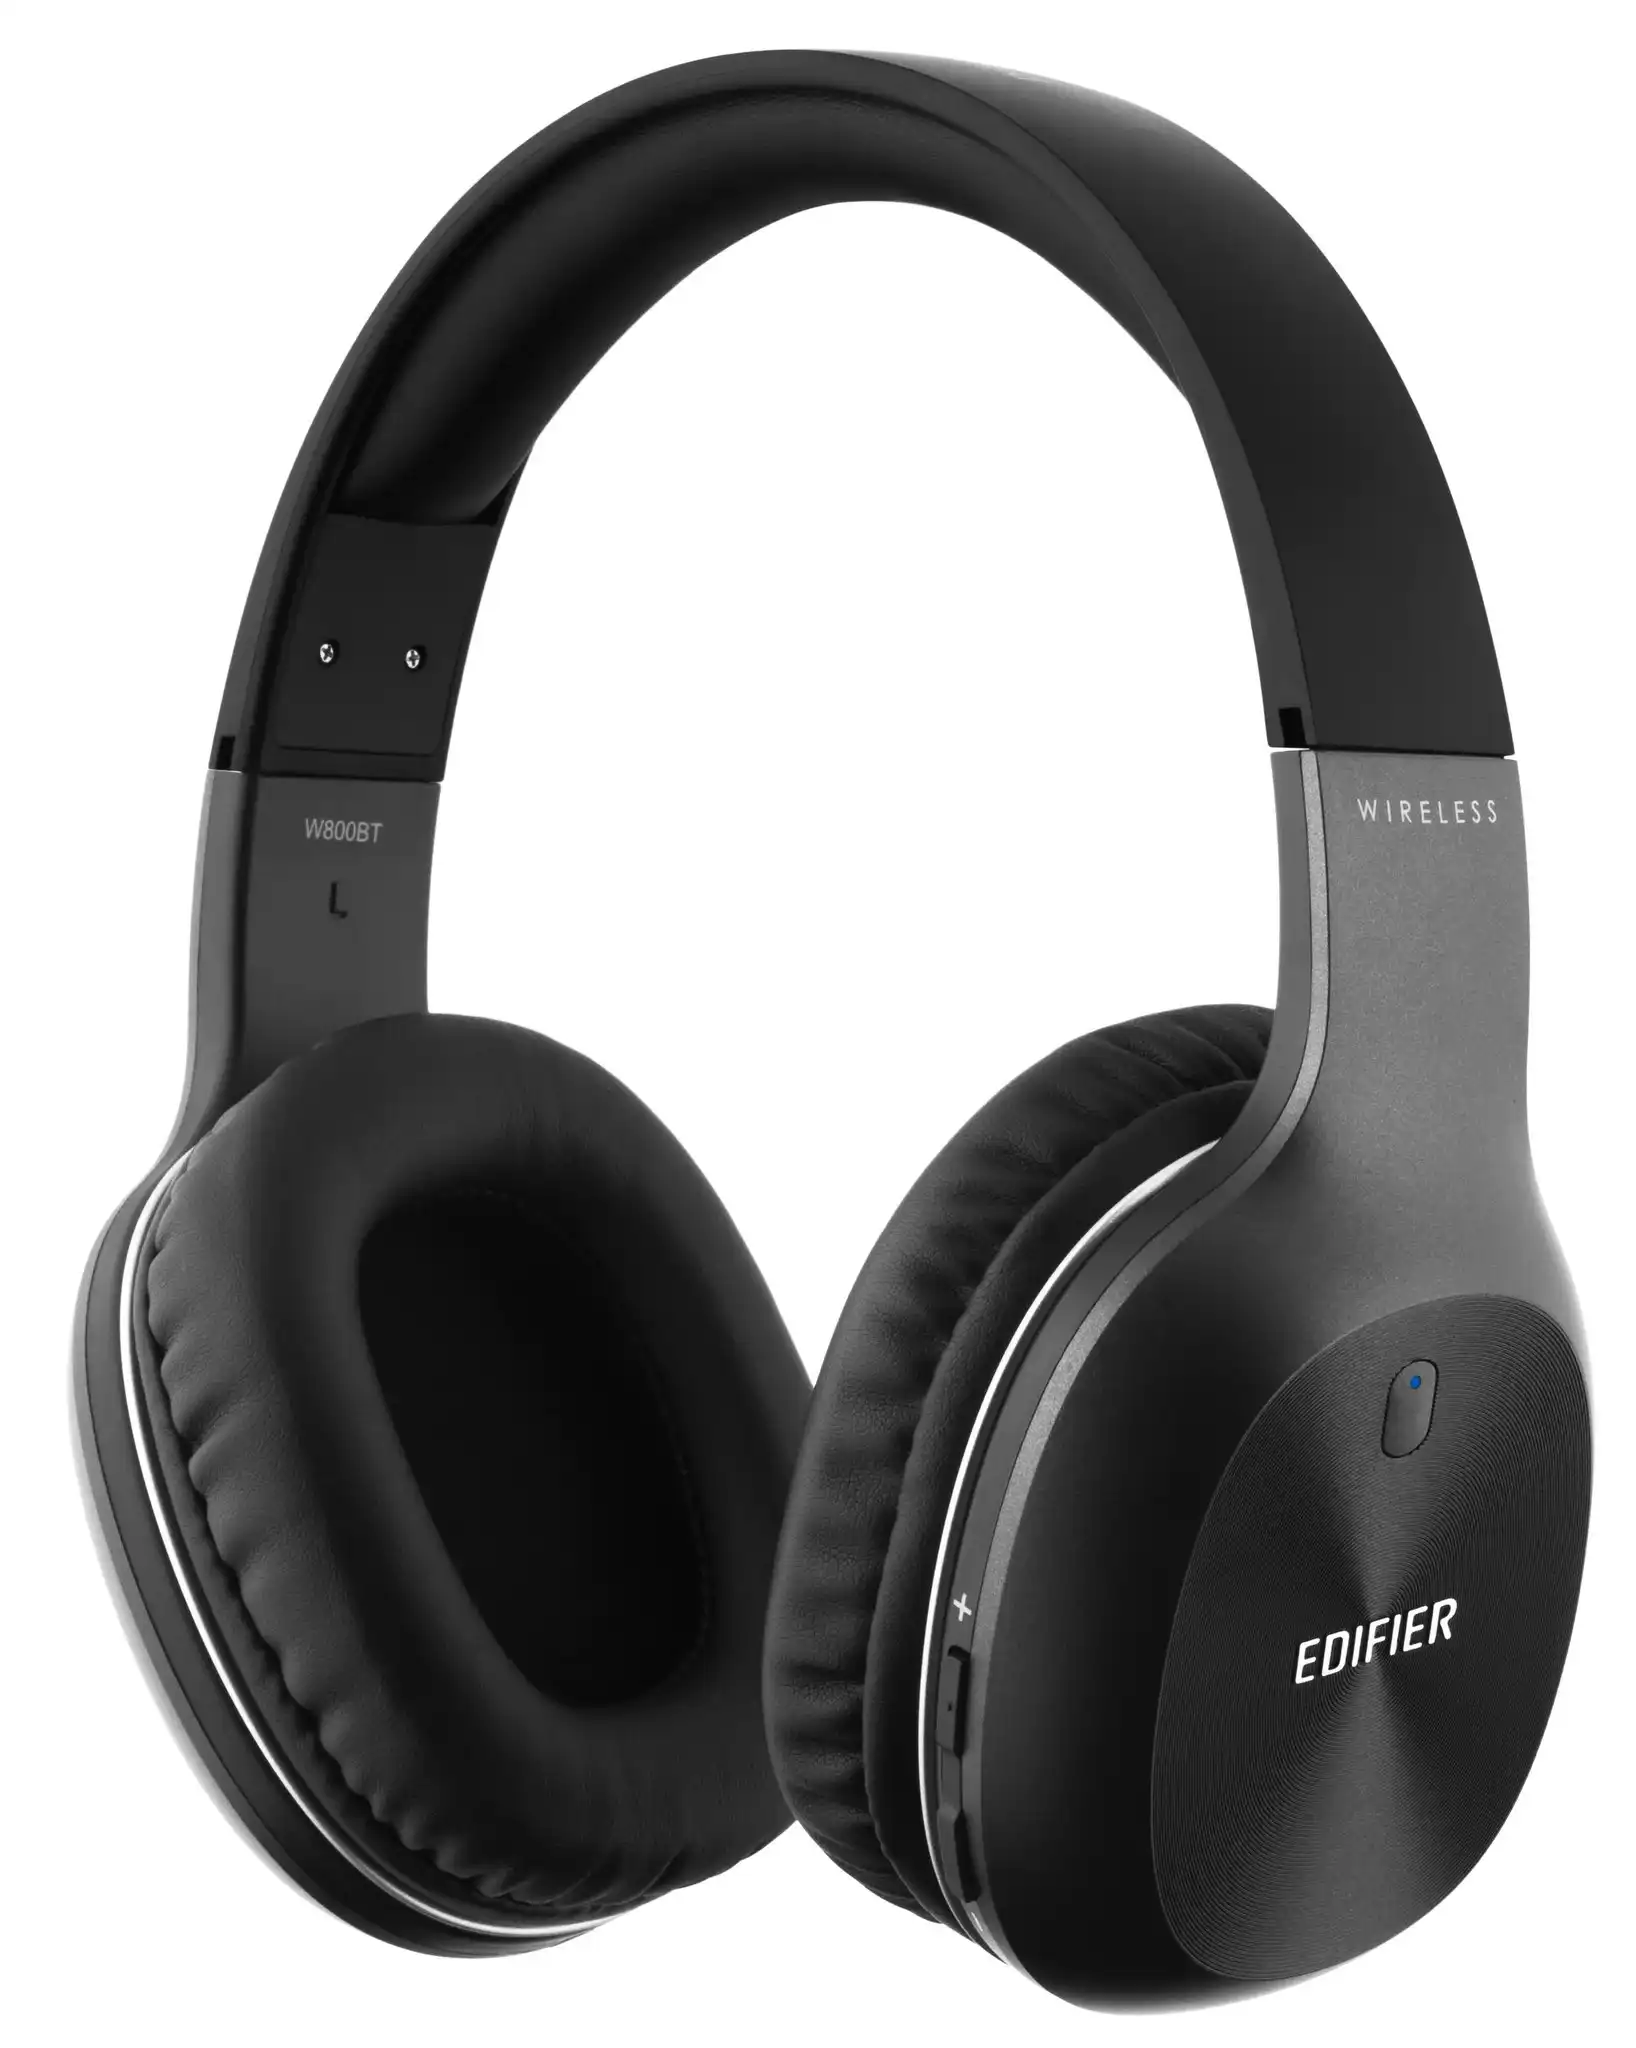 Edifier W800bt Plus Bluetooth Wireless Headphones - Black